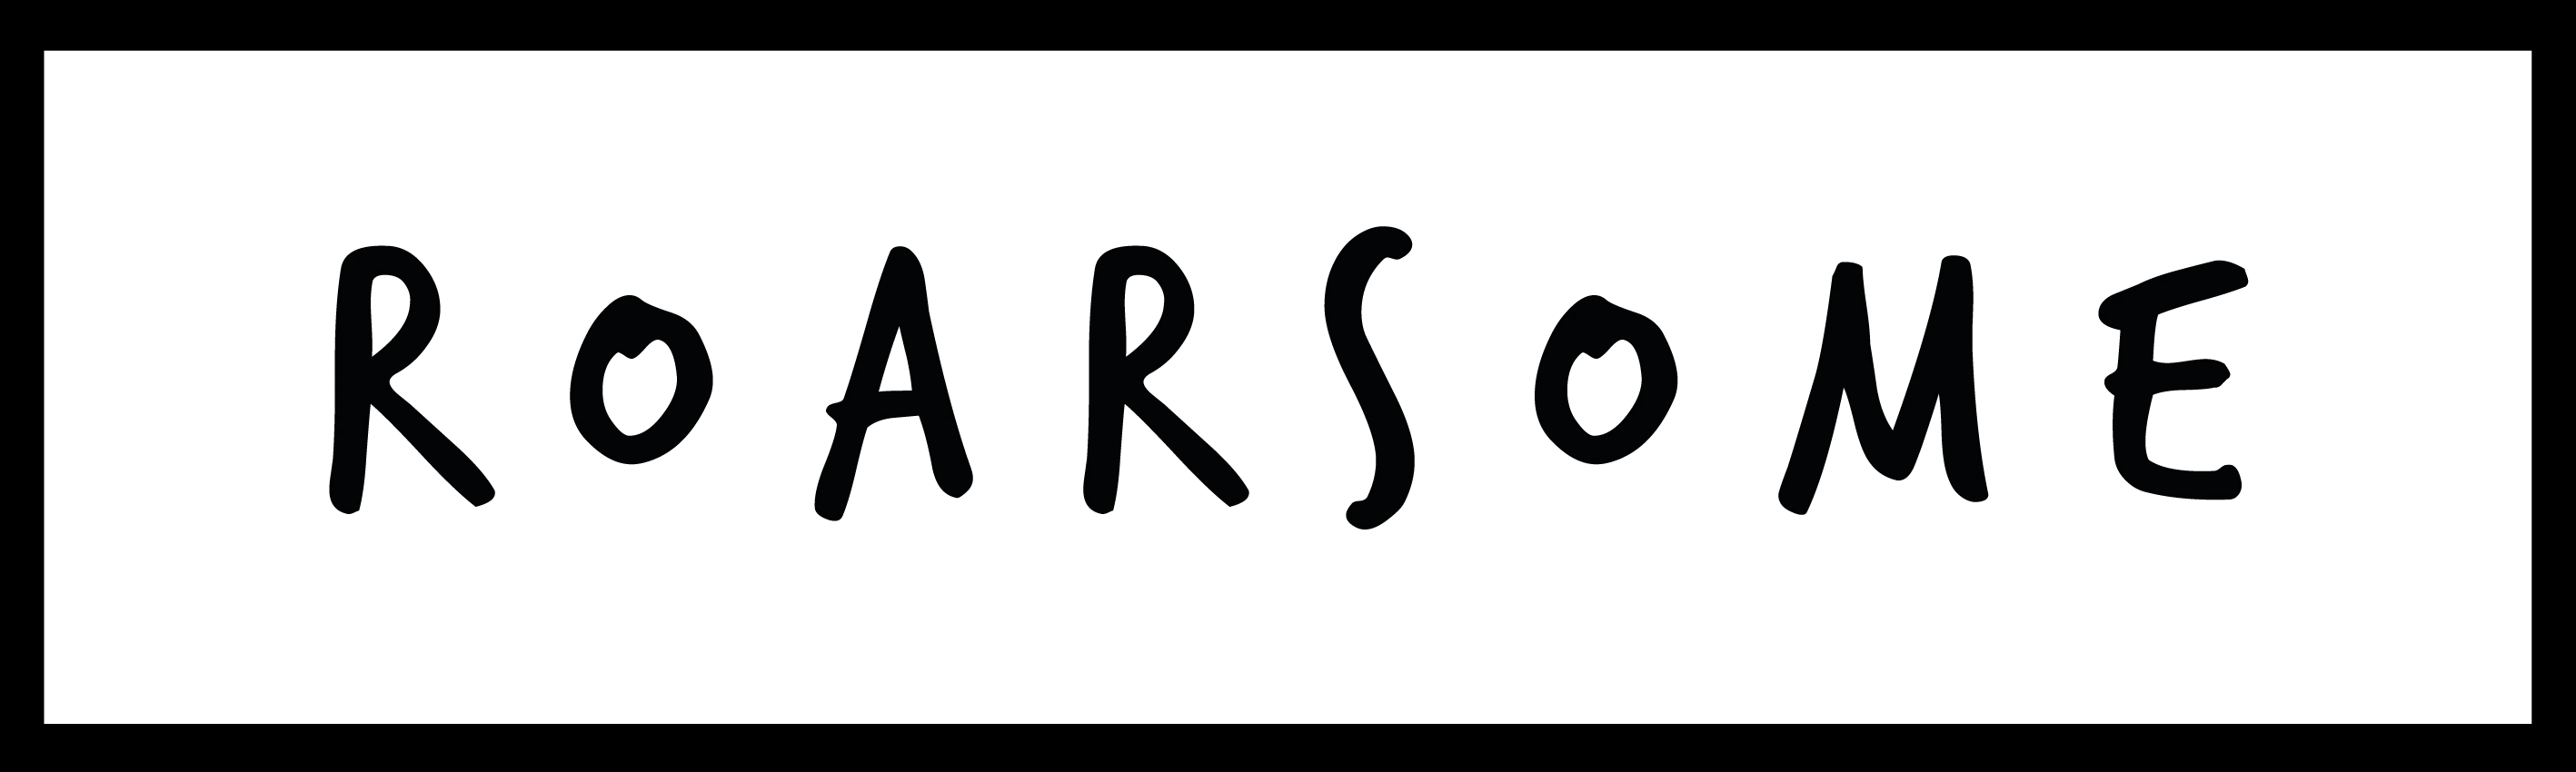 Roarsome logo